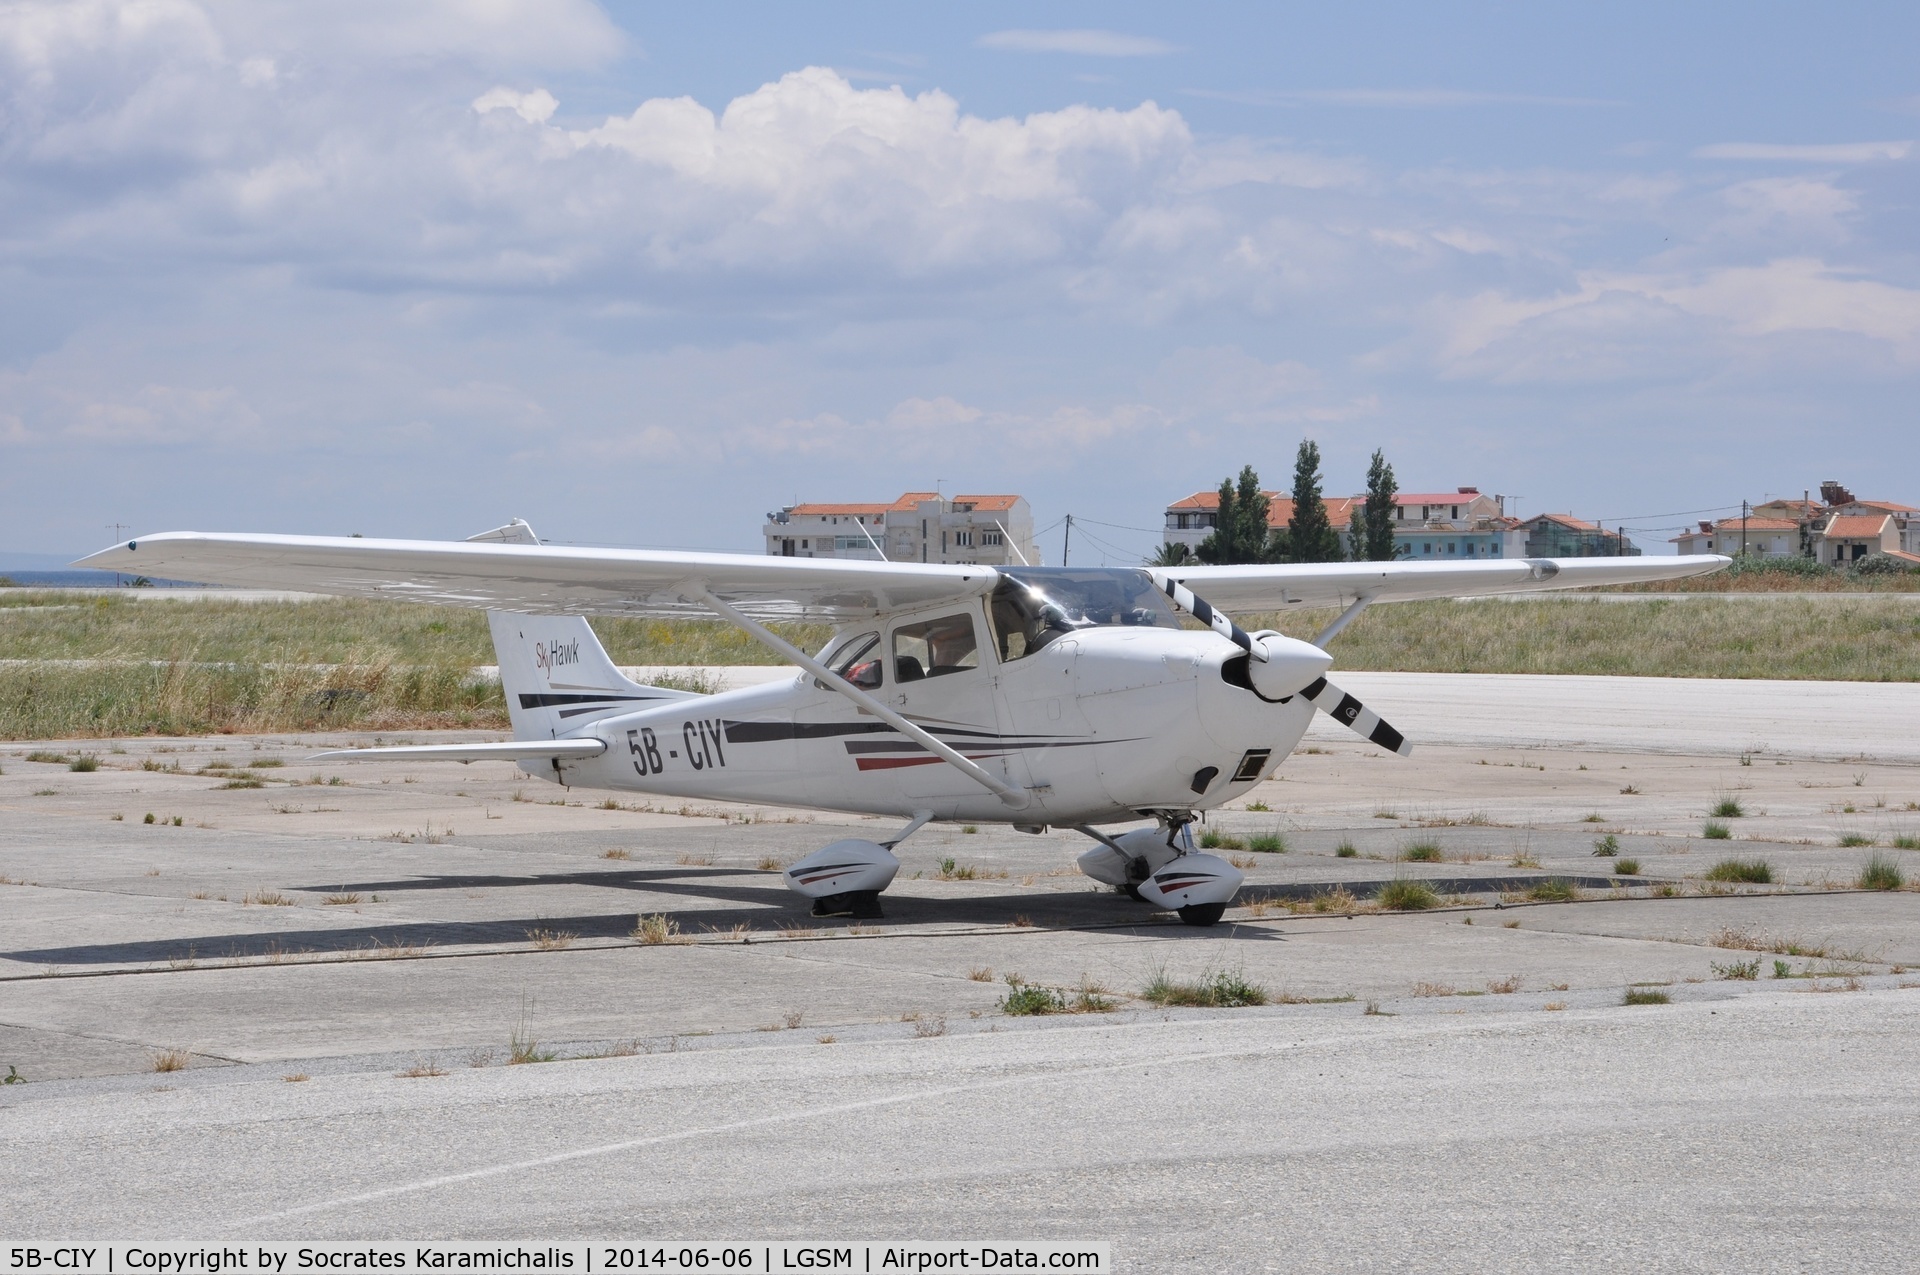 5B-CIY, 1967 Reims F172H Skyhawk C/N 0448, Parked at Samos  International Airport